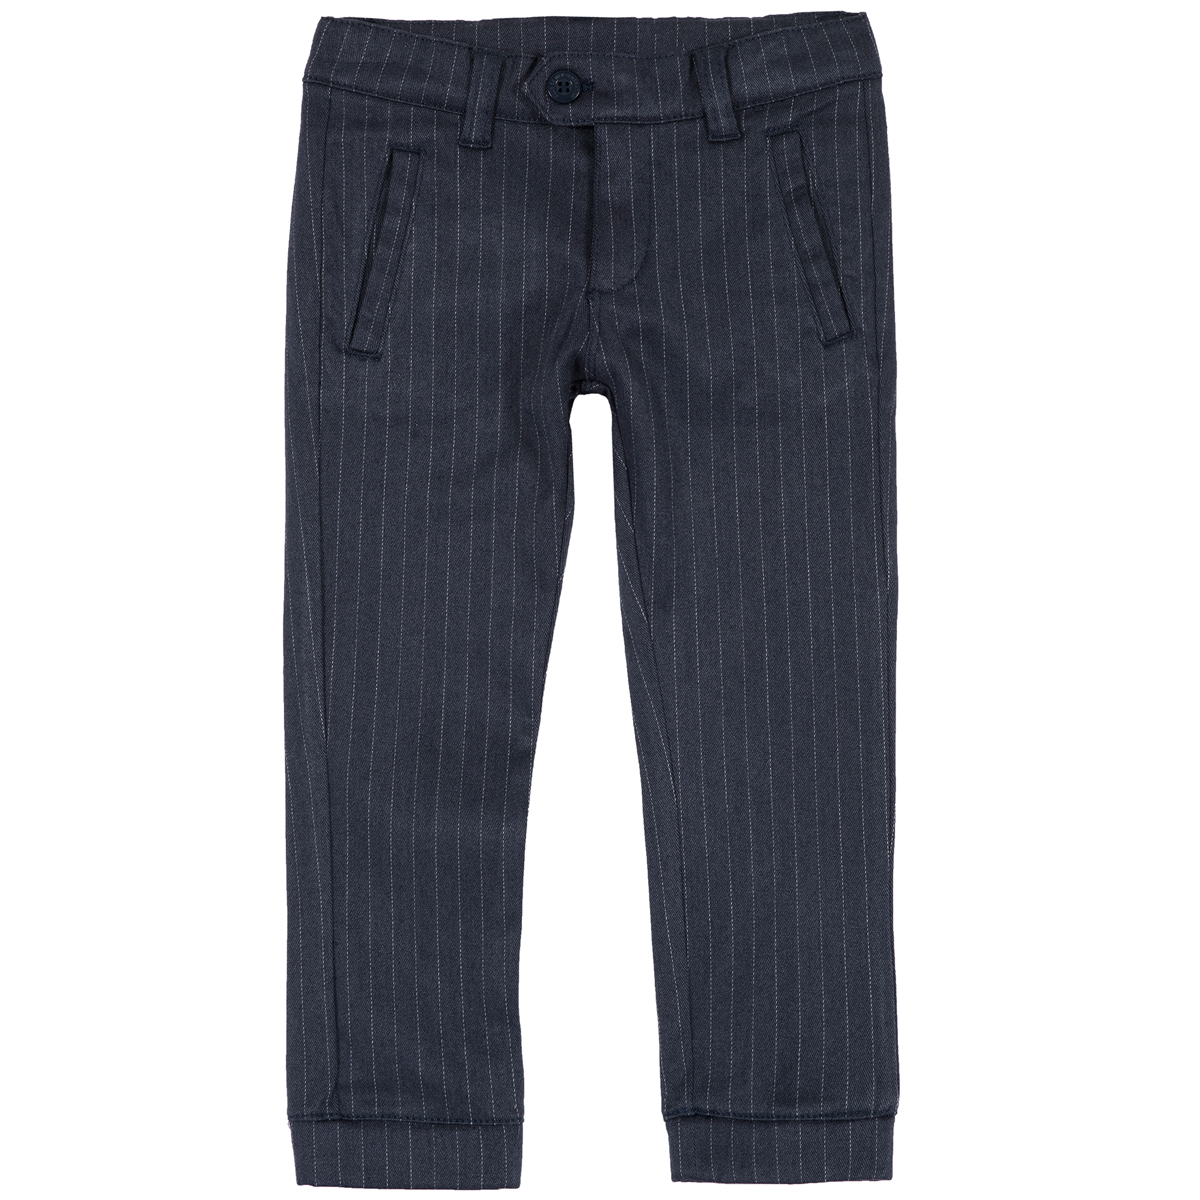 Pantaloni lungi copii Chicco, bleumarin cu dungi albe, 08046